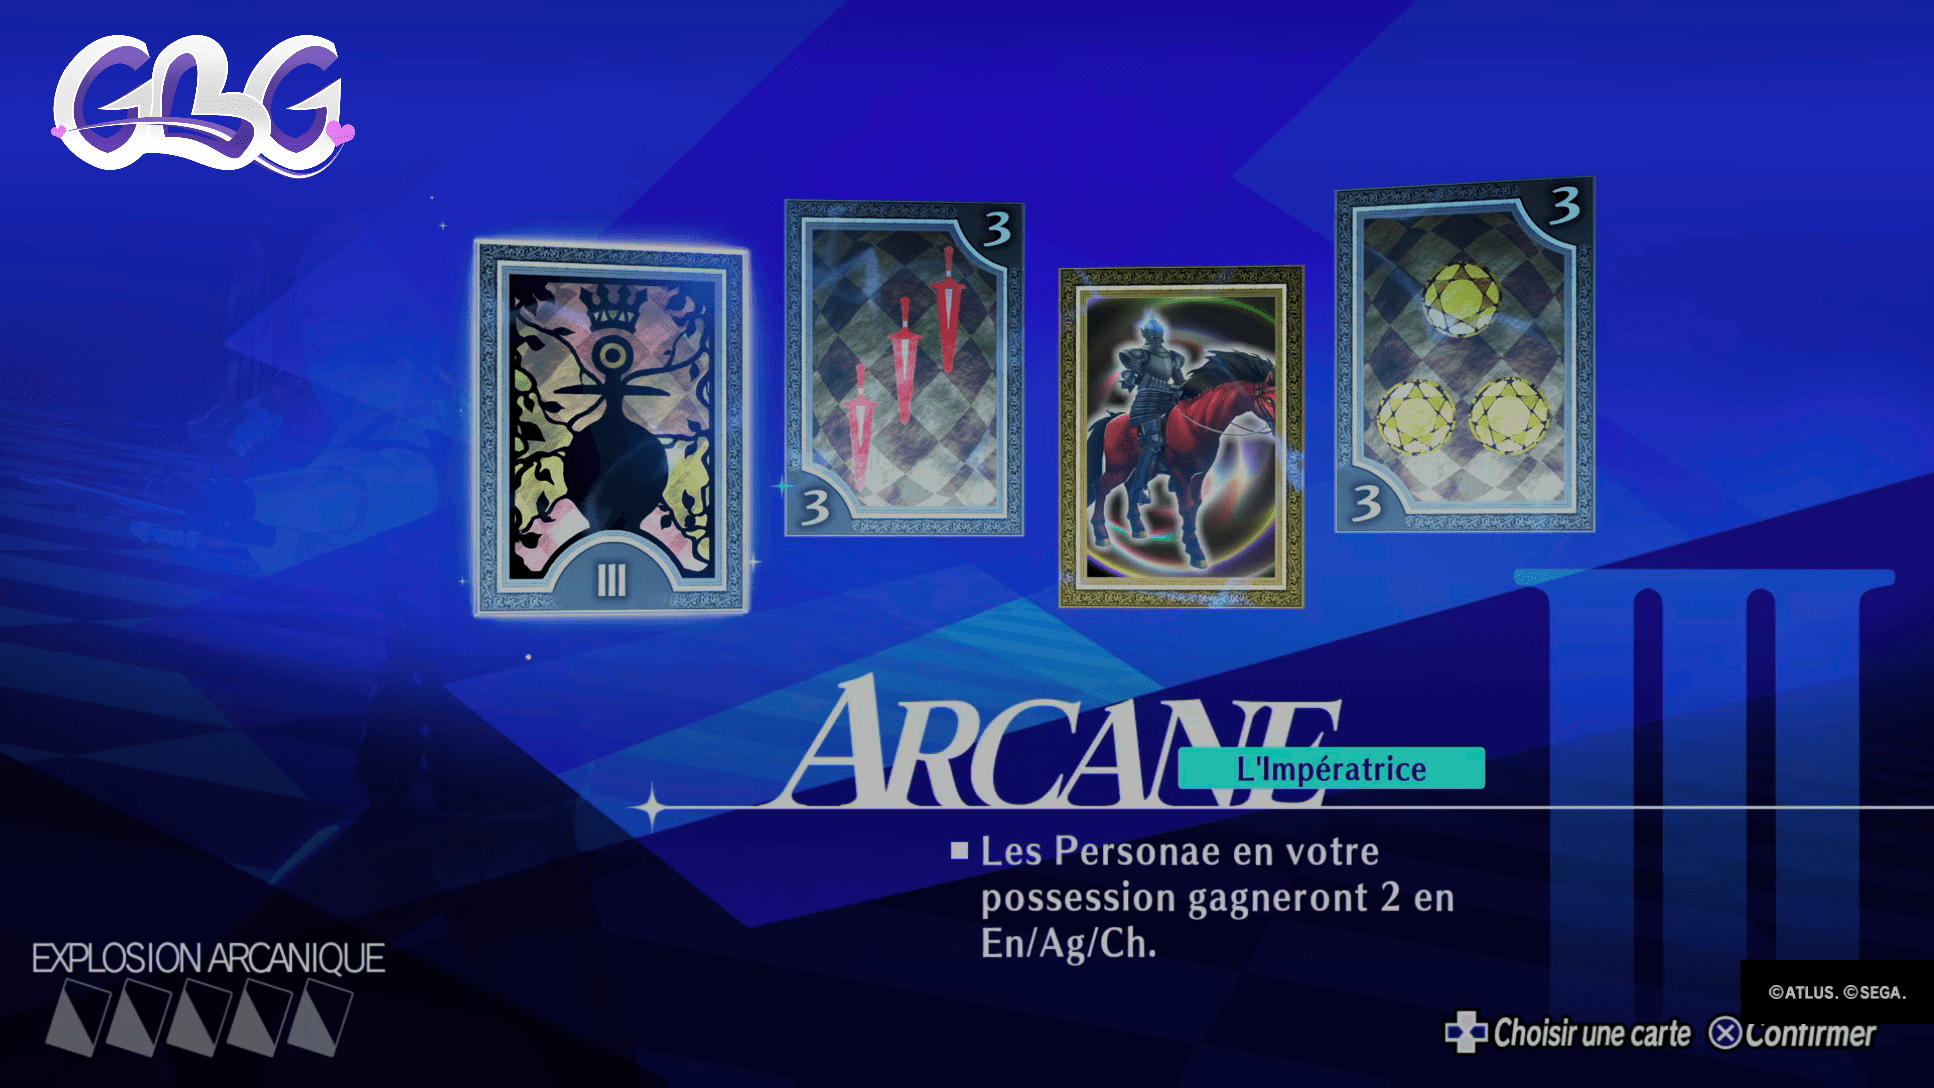 Un exemple de tirage de cartes après un combat dans "Persona 3 Reload"